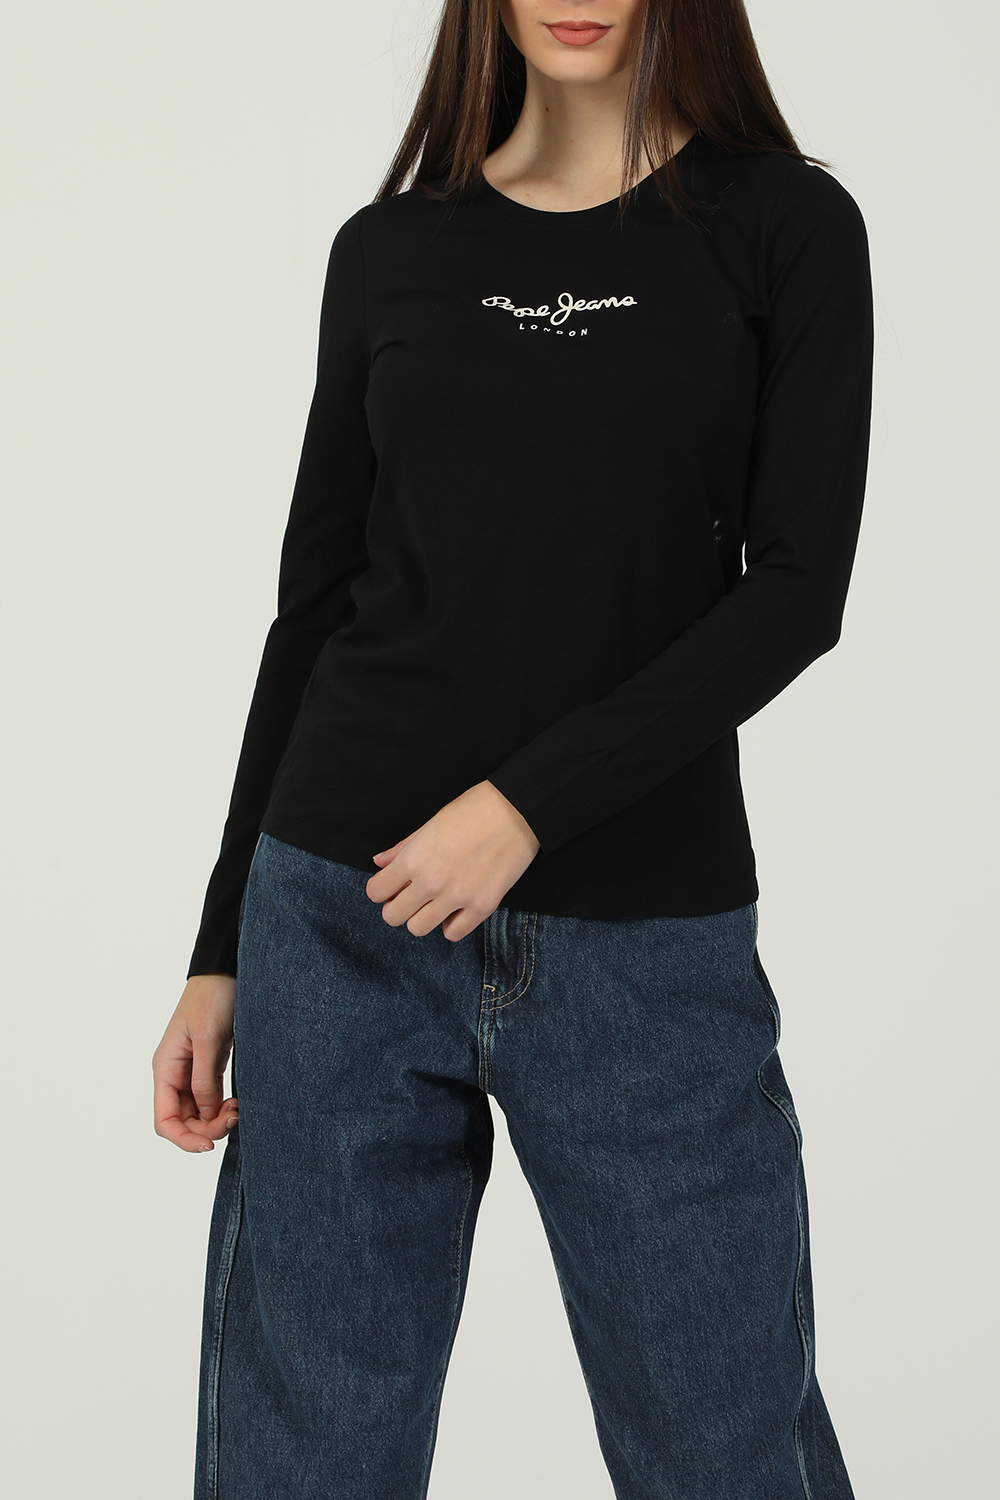 PEPE JEANS – Γυναικεία μακρυμάνικη μπλούζα PEPE JEANS NEW VIRGINIA μαύρη 1822898.0-0071